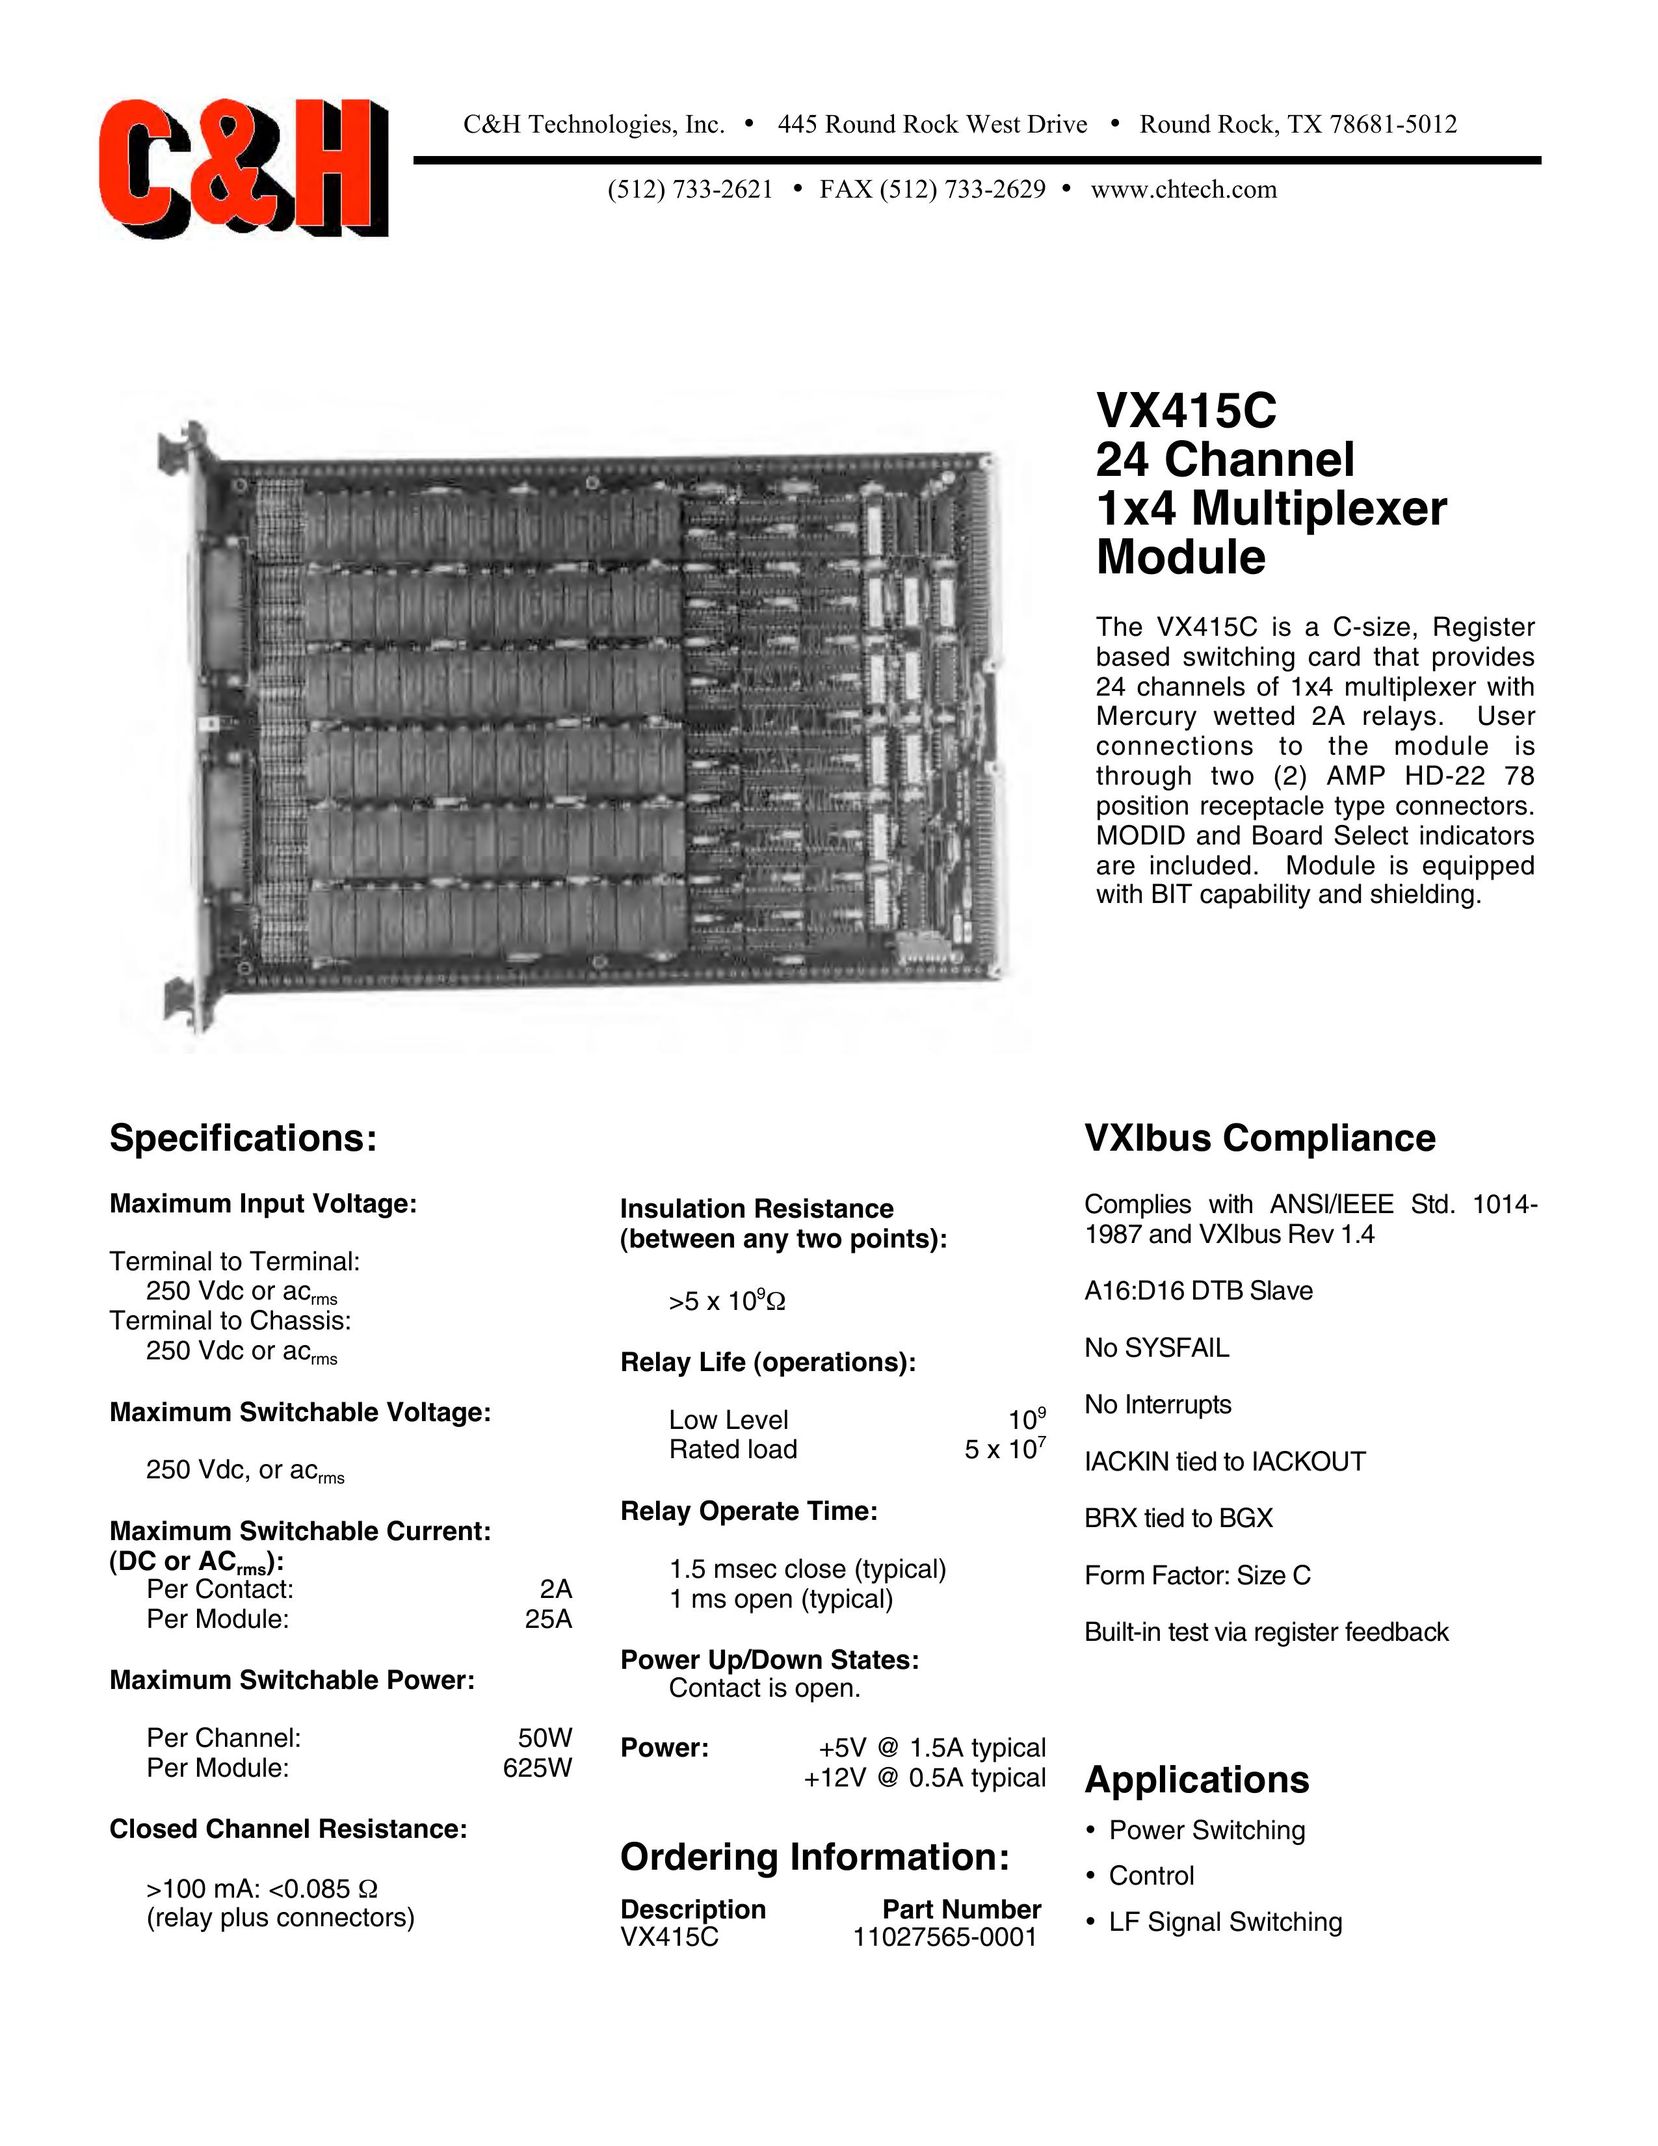 CH Tech VX415C Switch User Manual